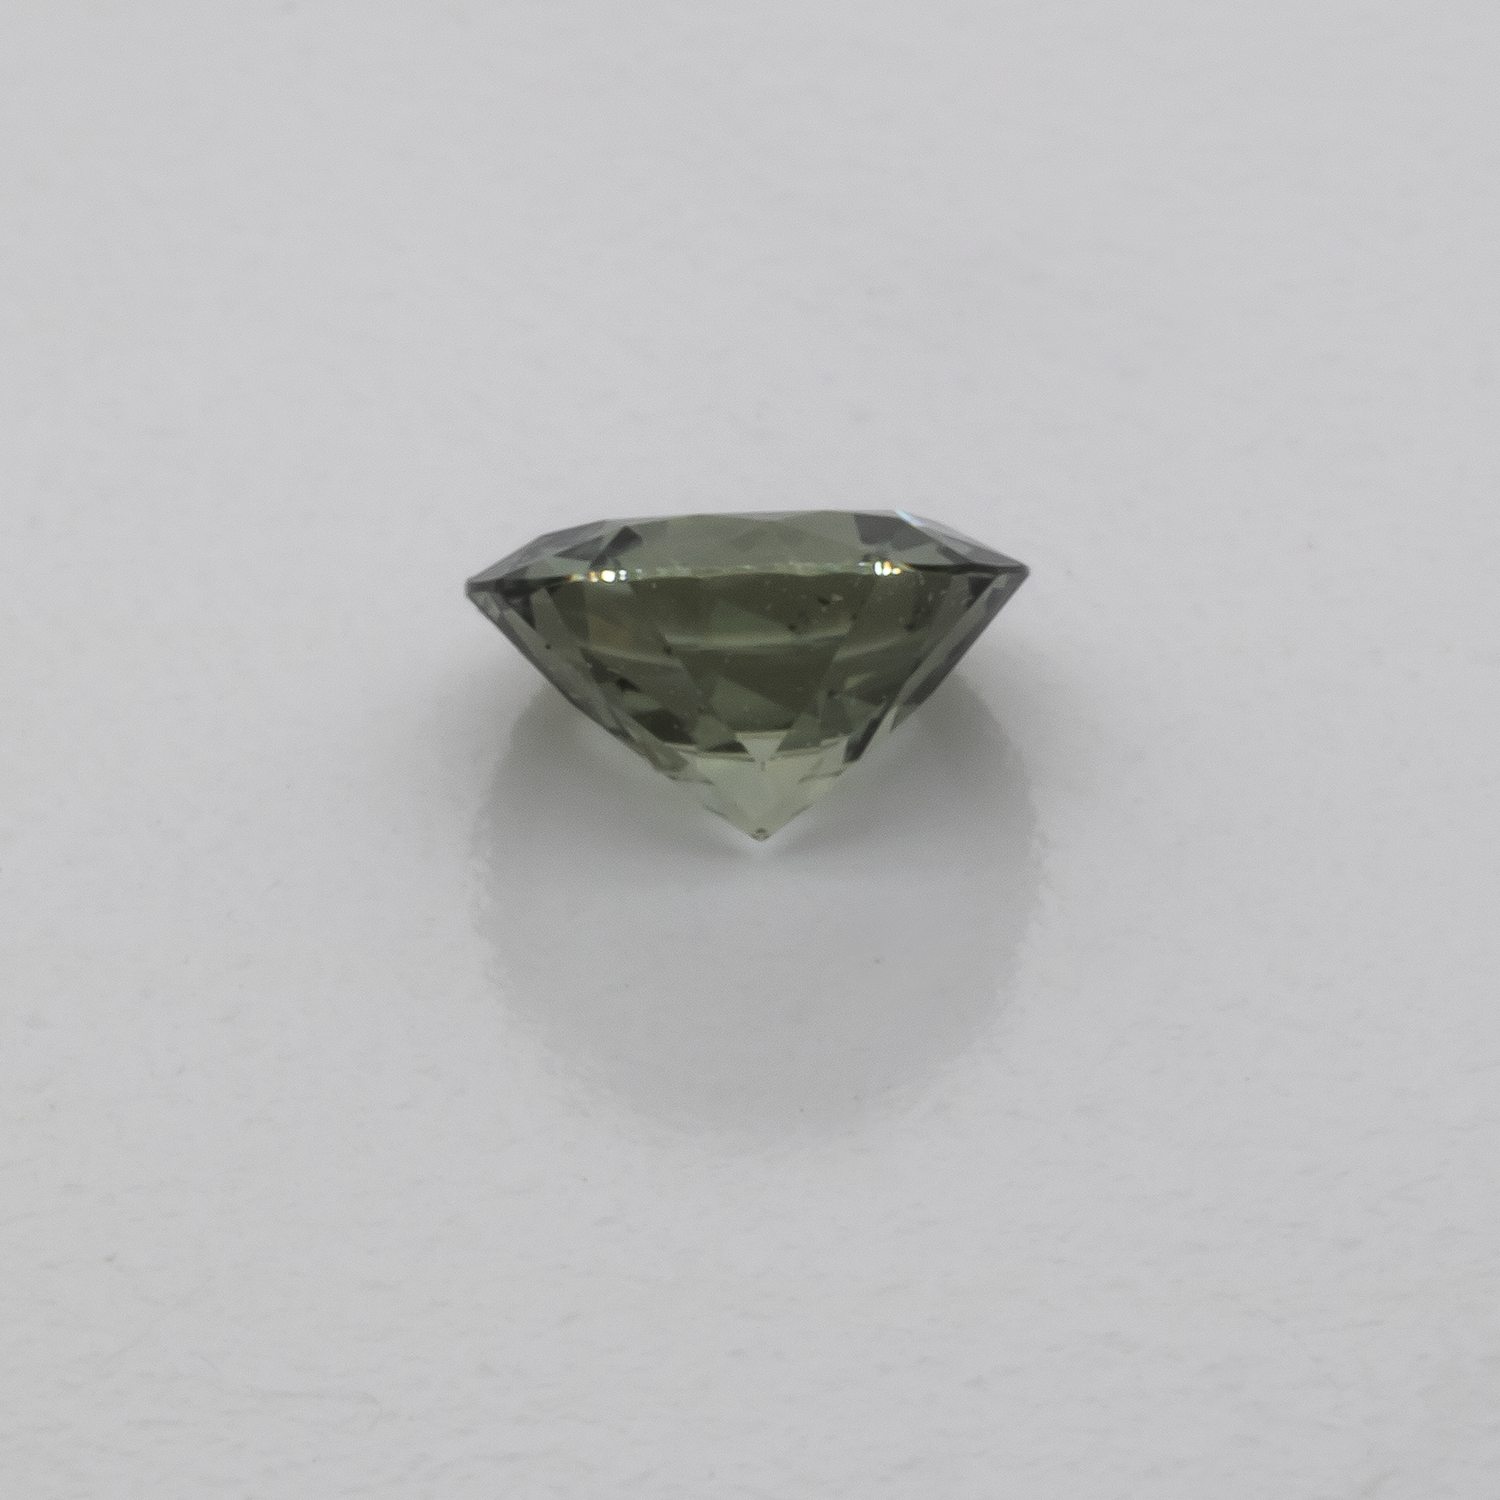 Sapphire - blue/green, round, 4.7x4.7 mm, 0.42 cts, No. XSR11183